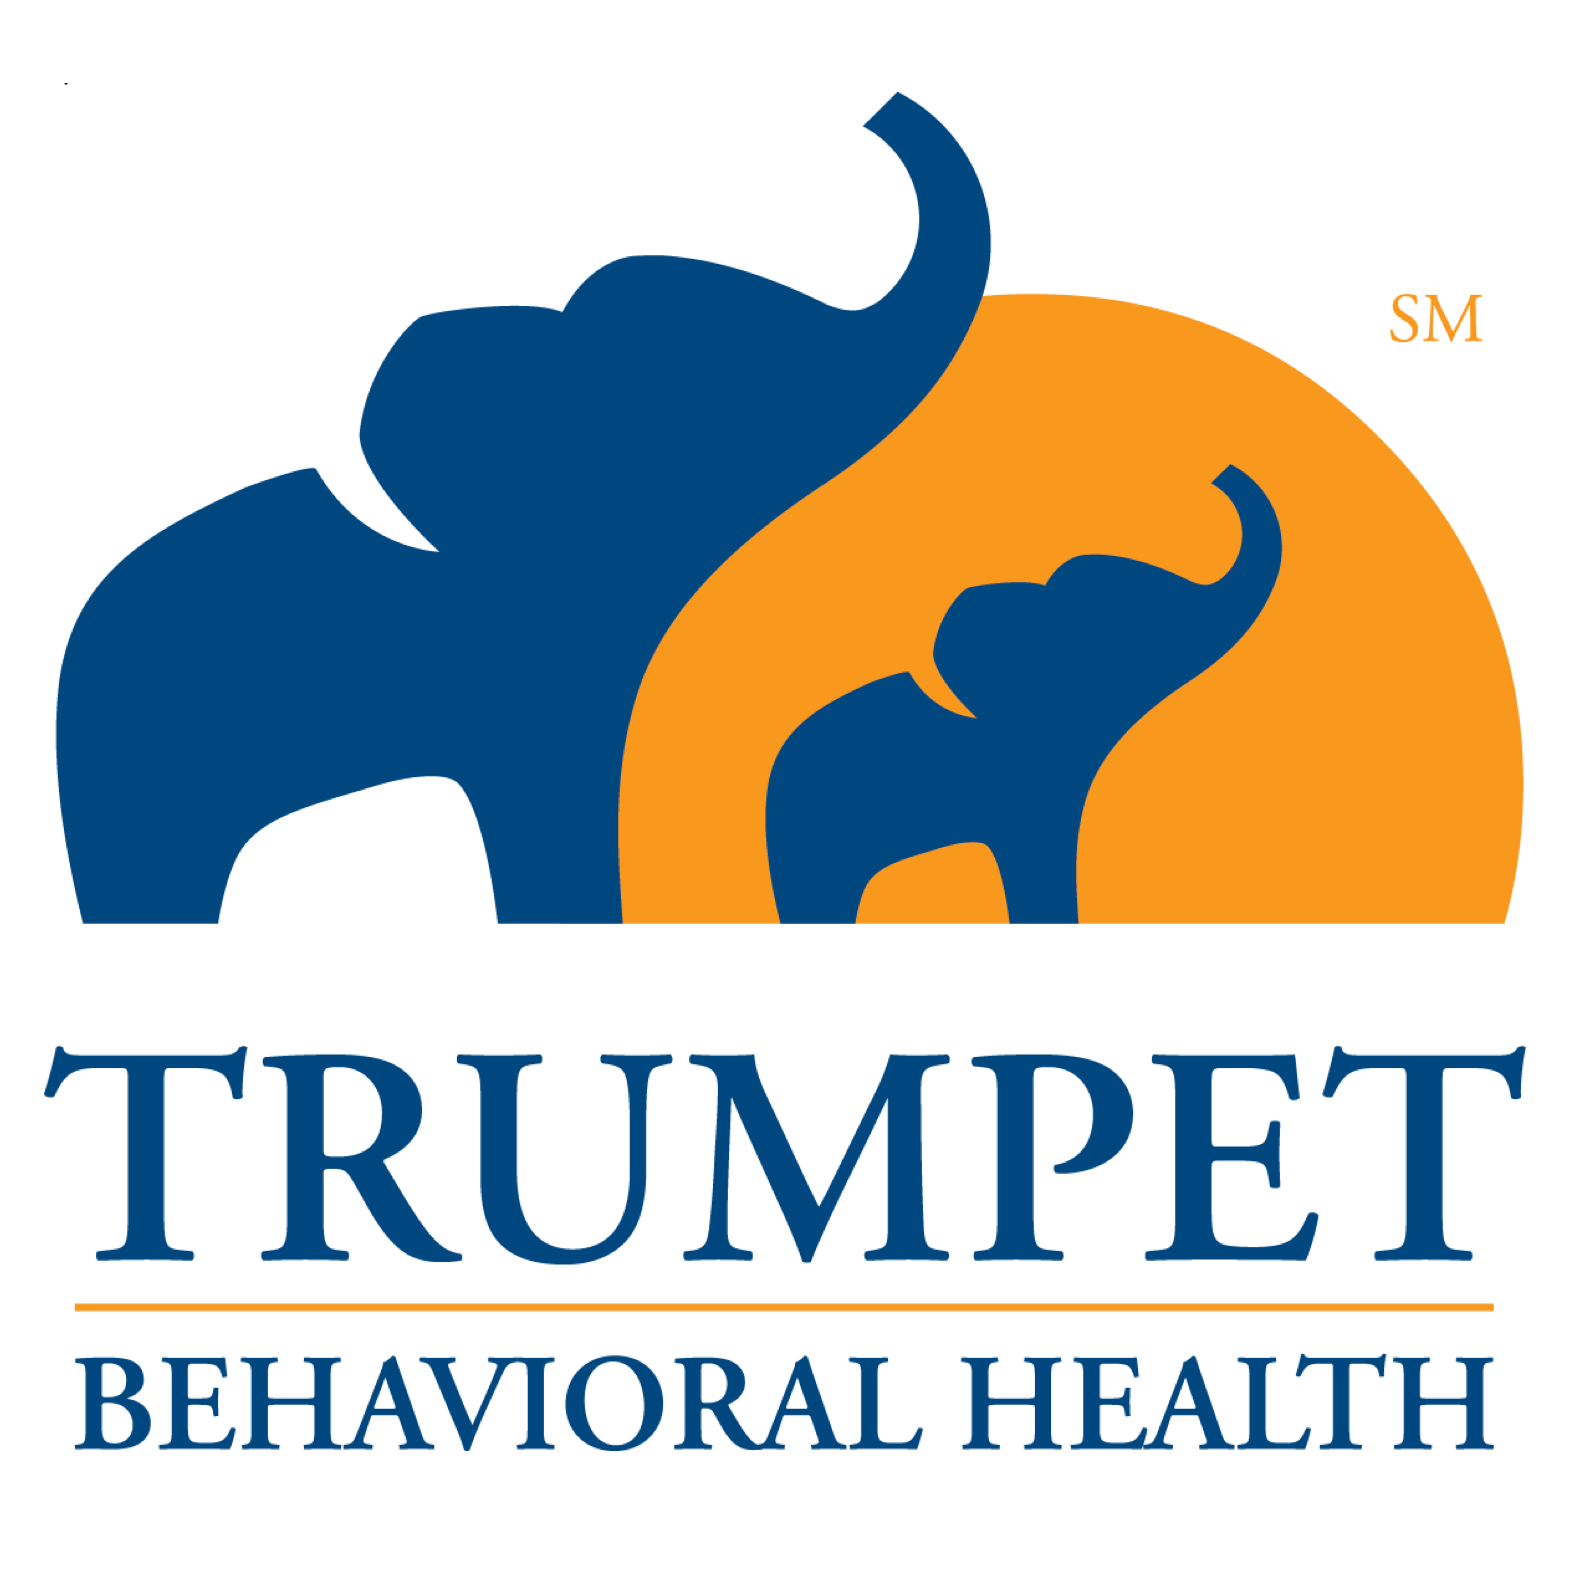 Trumpet Behavioral Health